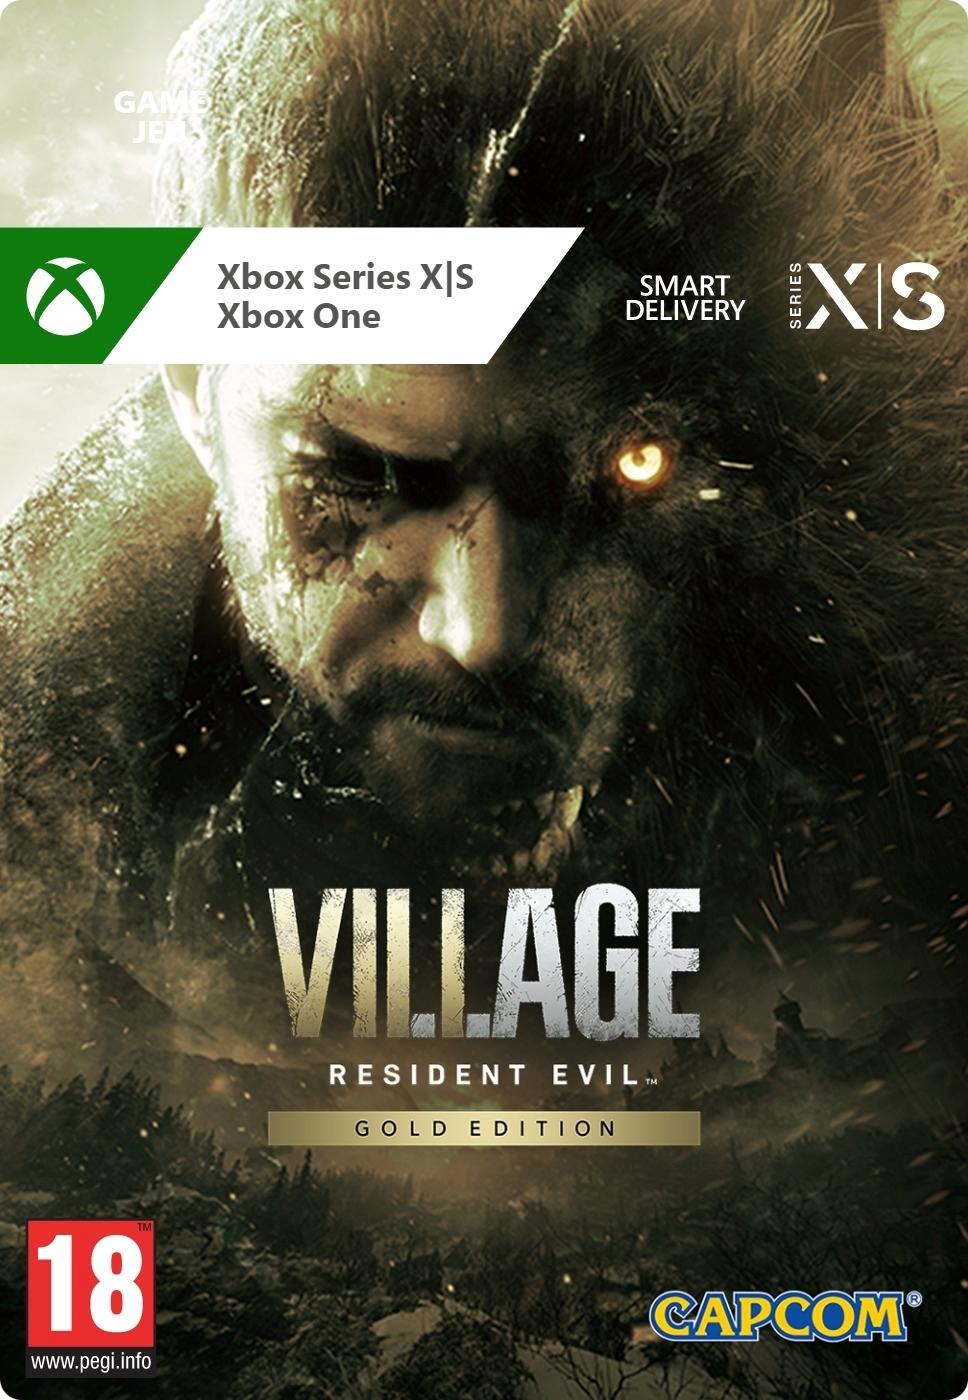 Resident Evil Village: Gold Edition - Xbox Series X/Xbox One - Game | G3Q-01416 (b10e785c-3c60-0443-975e-639b9094ae5b)